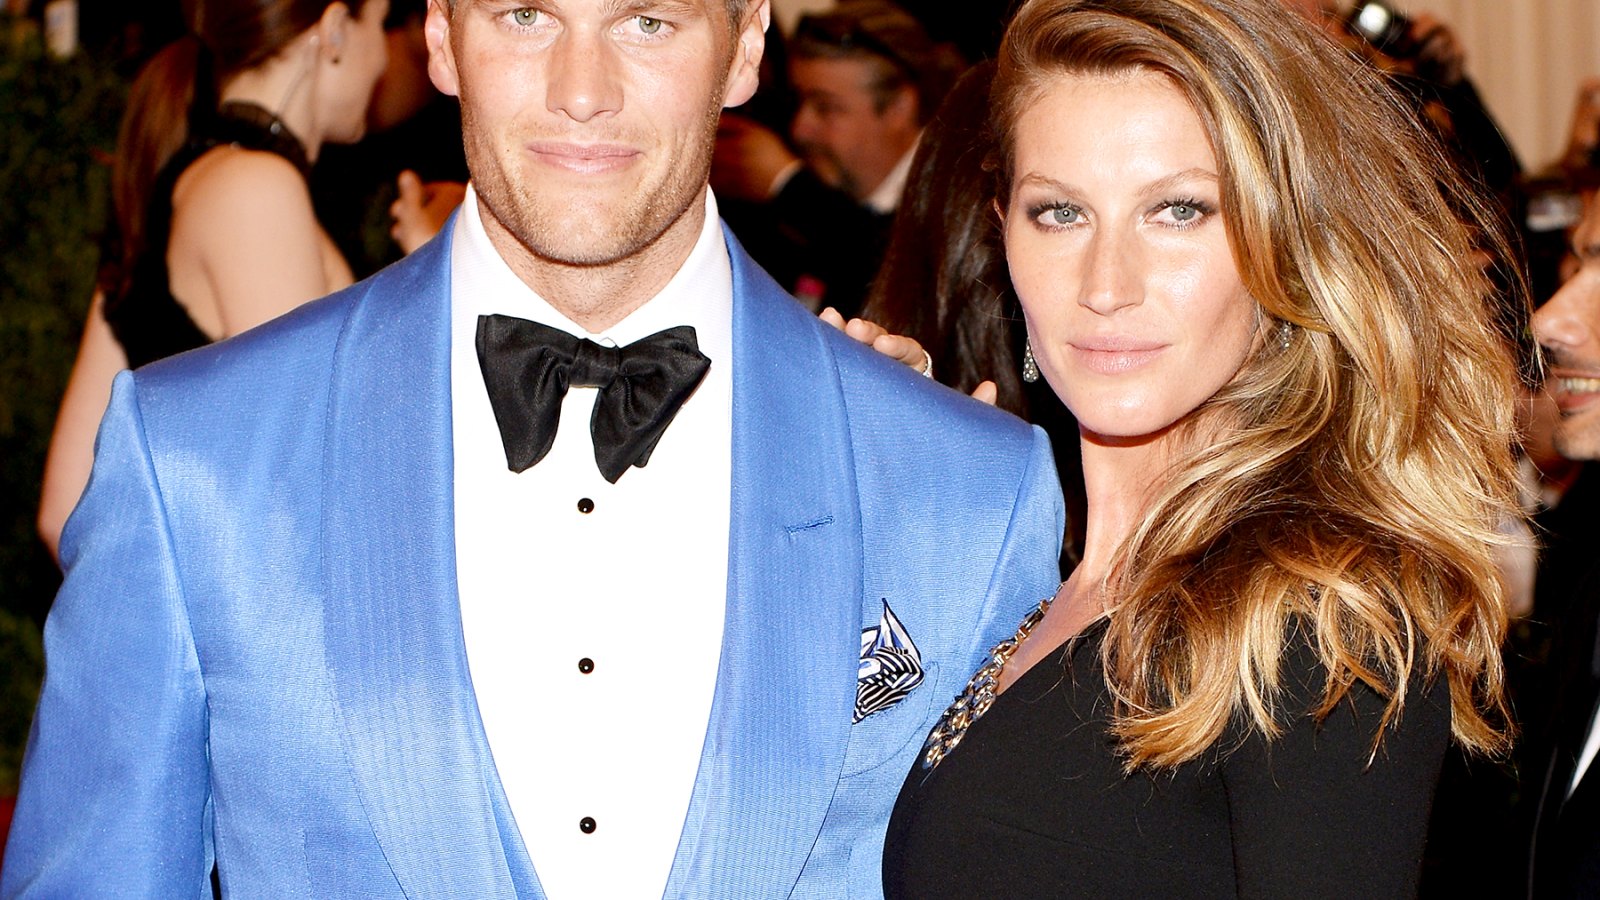 Gisele Bundchen and Tom Brady threatening divorce